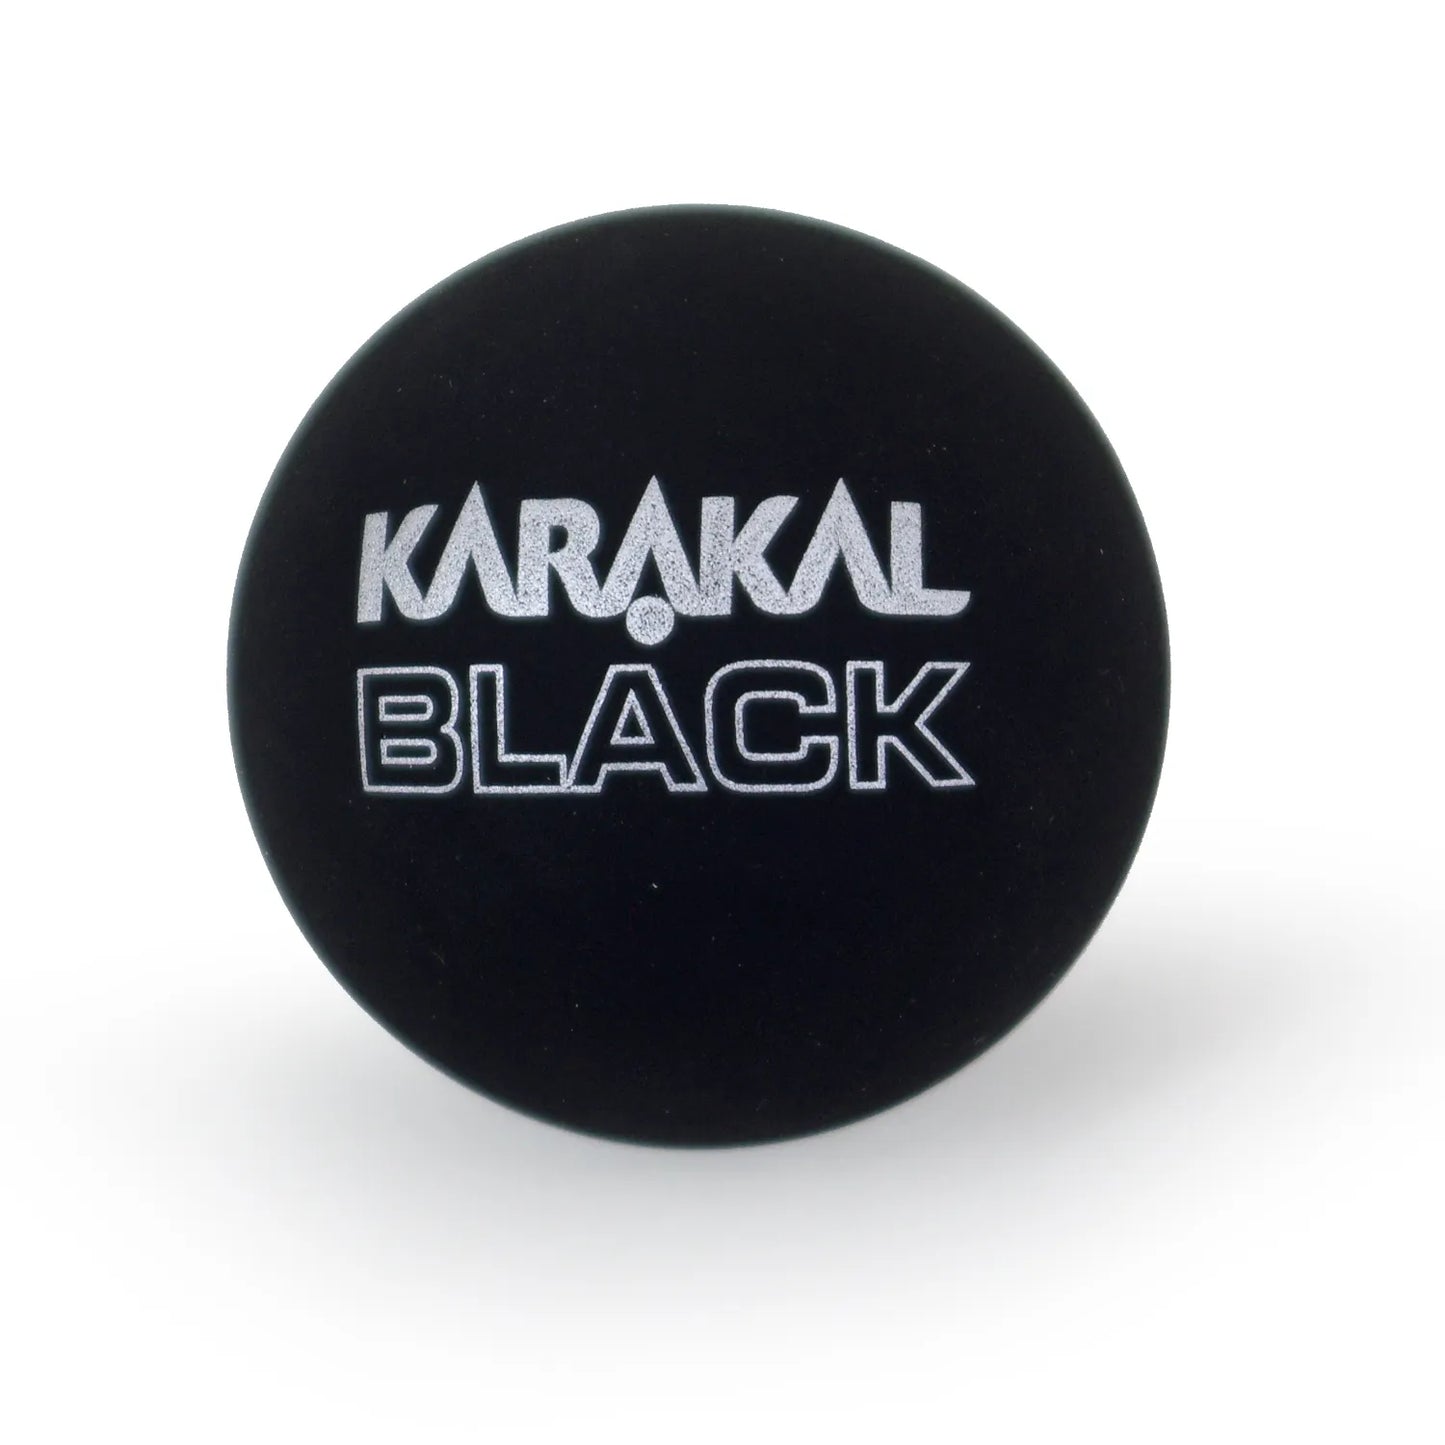 Karakal Black Competition Racketball Balls 02